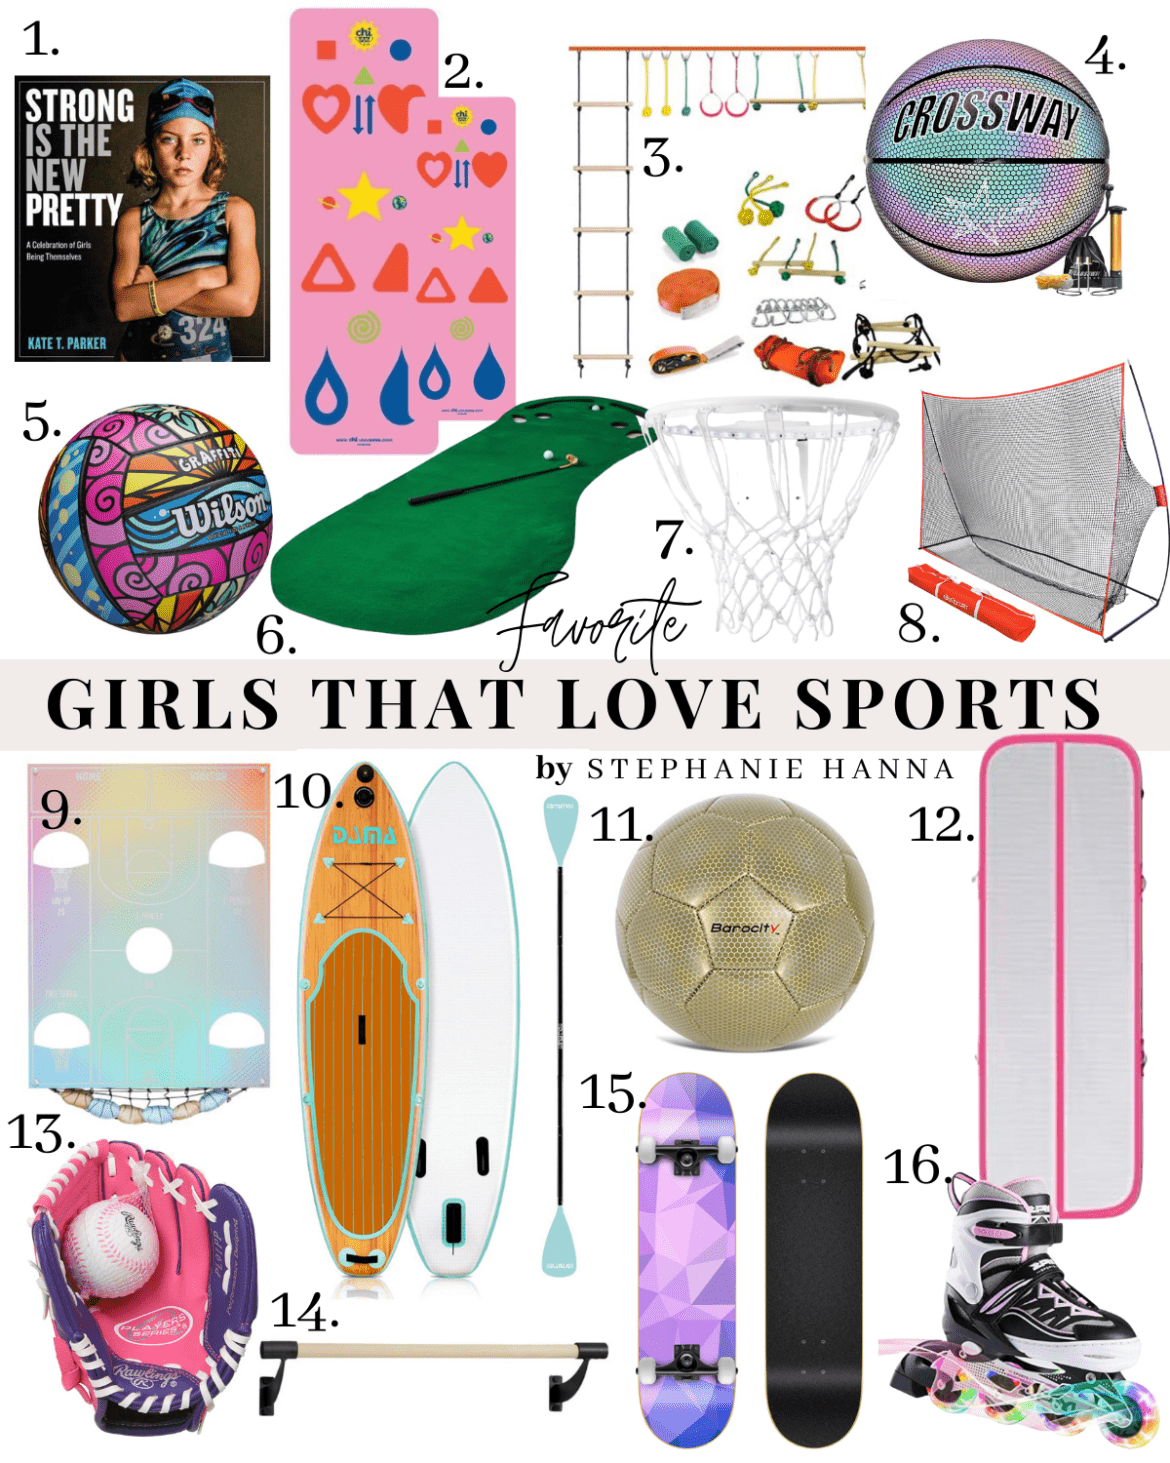 Girls That Love Sports, bike, soccer ball, water sports, golf